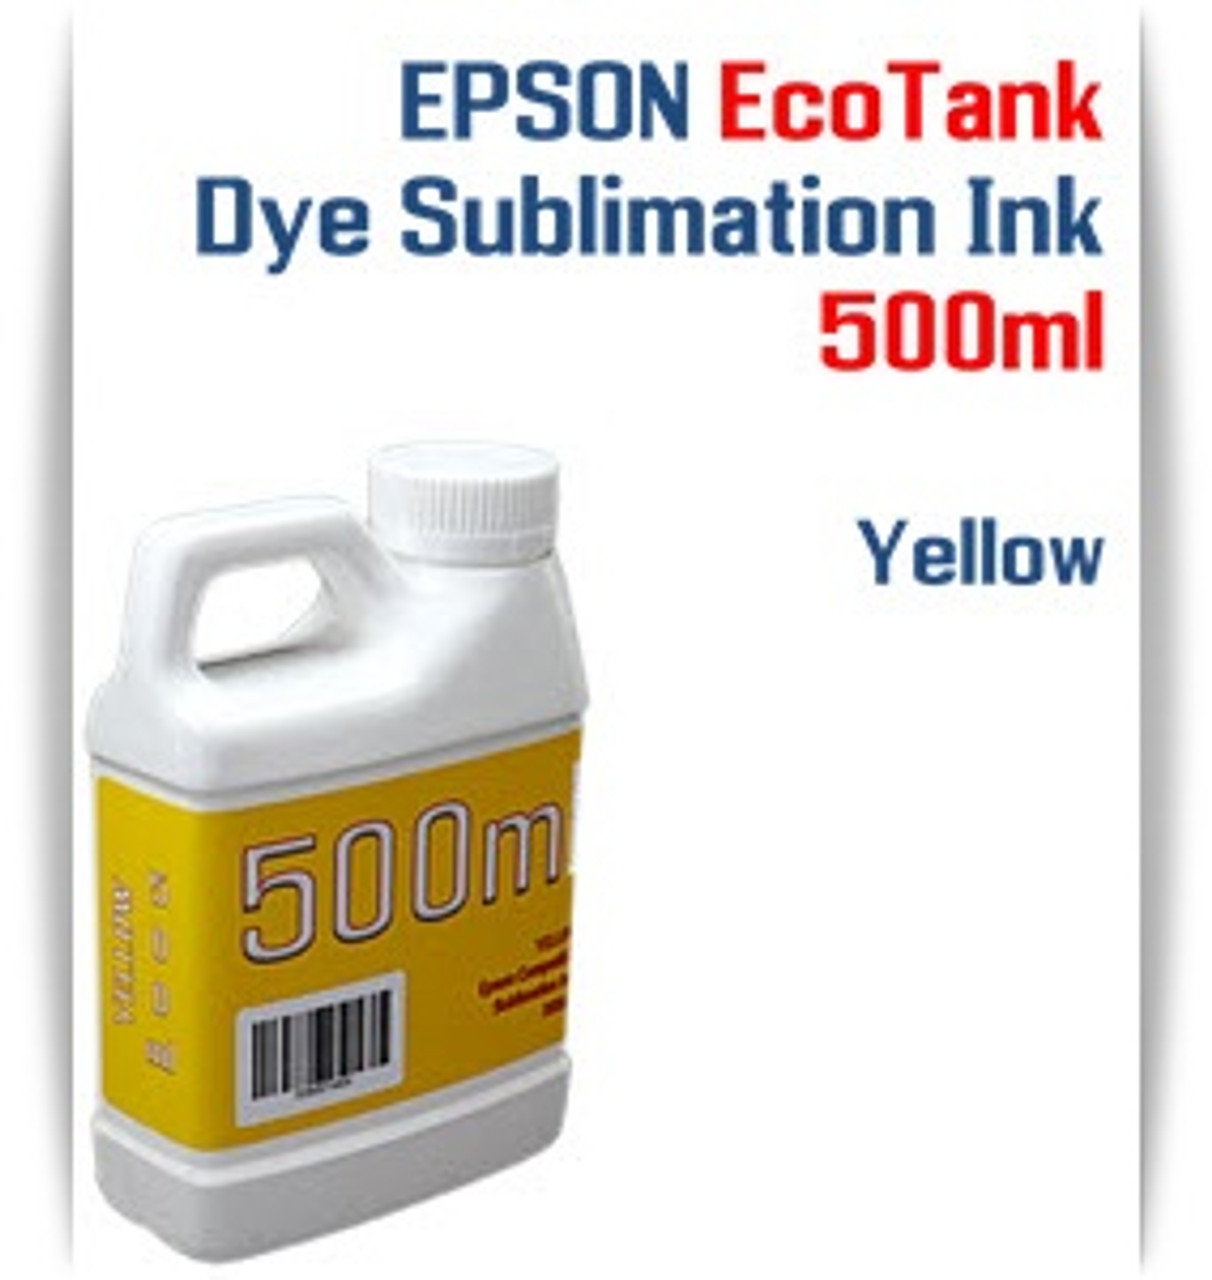 Yellow EPSON EcoTank printer Dye Sublimation Ink 500ml bottles